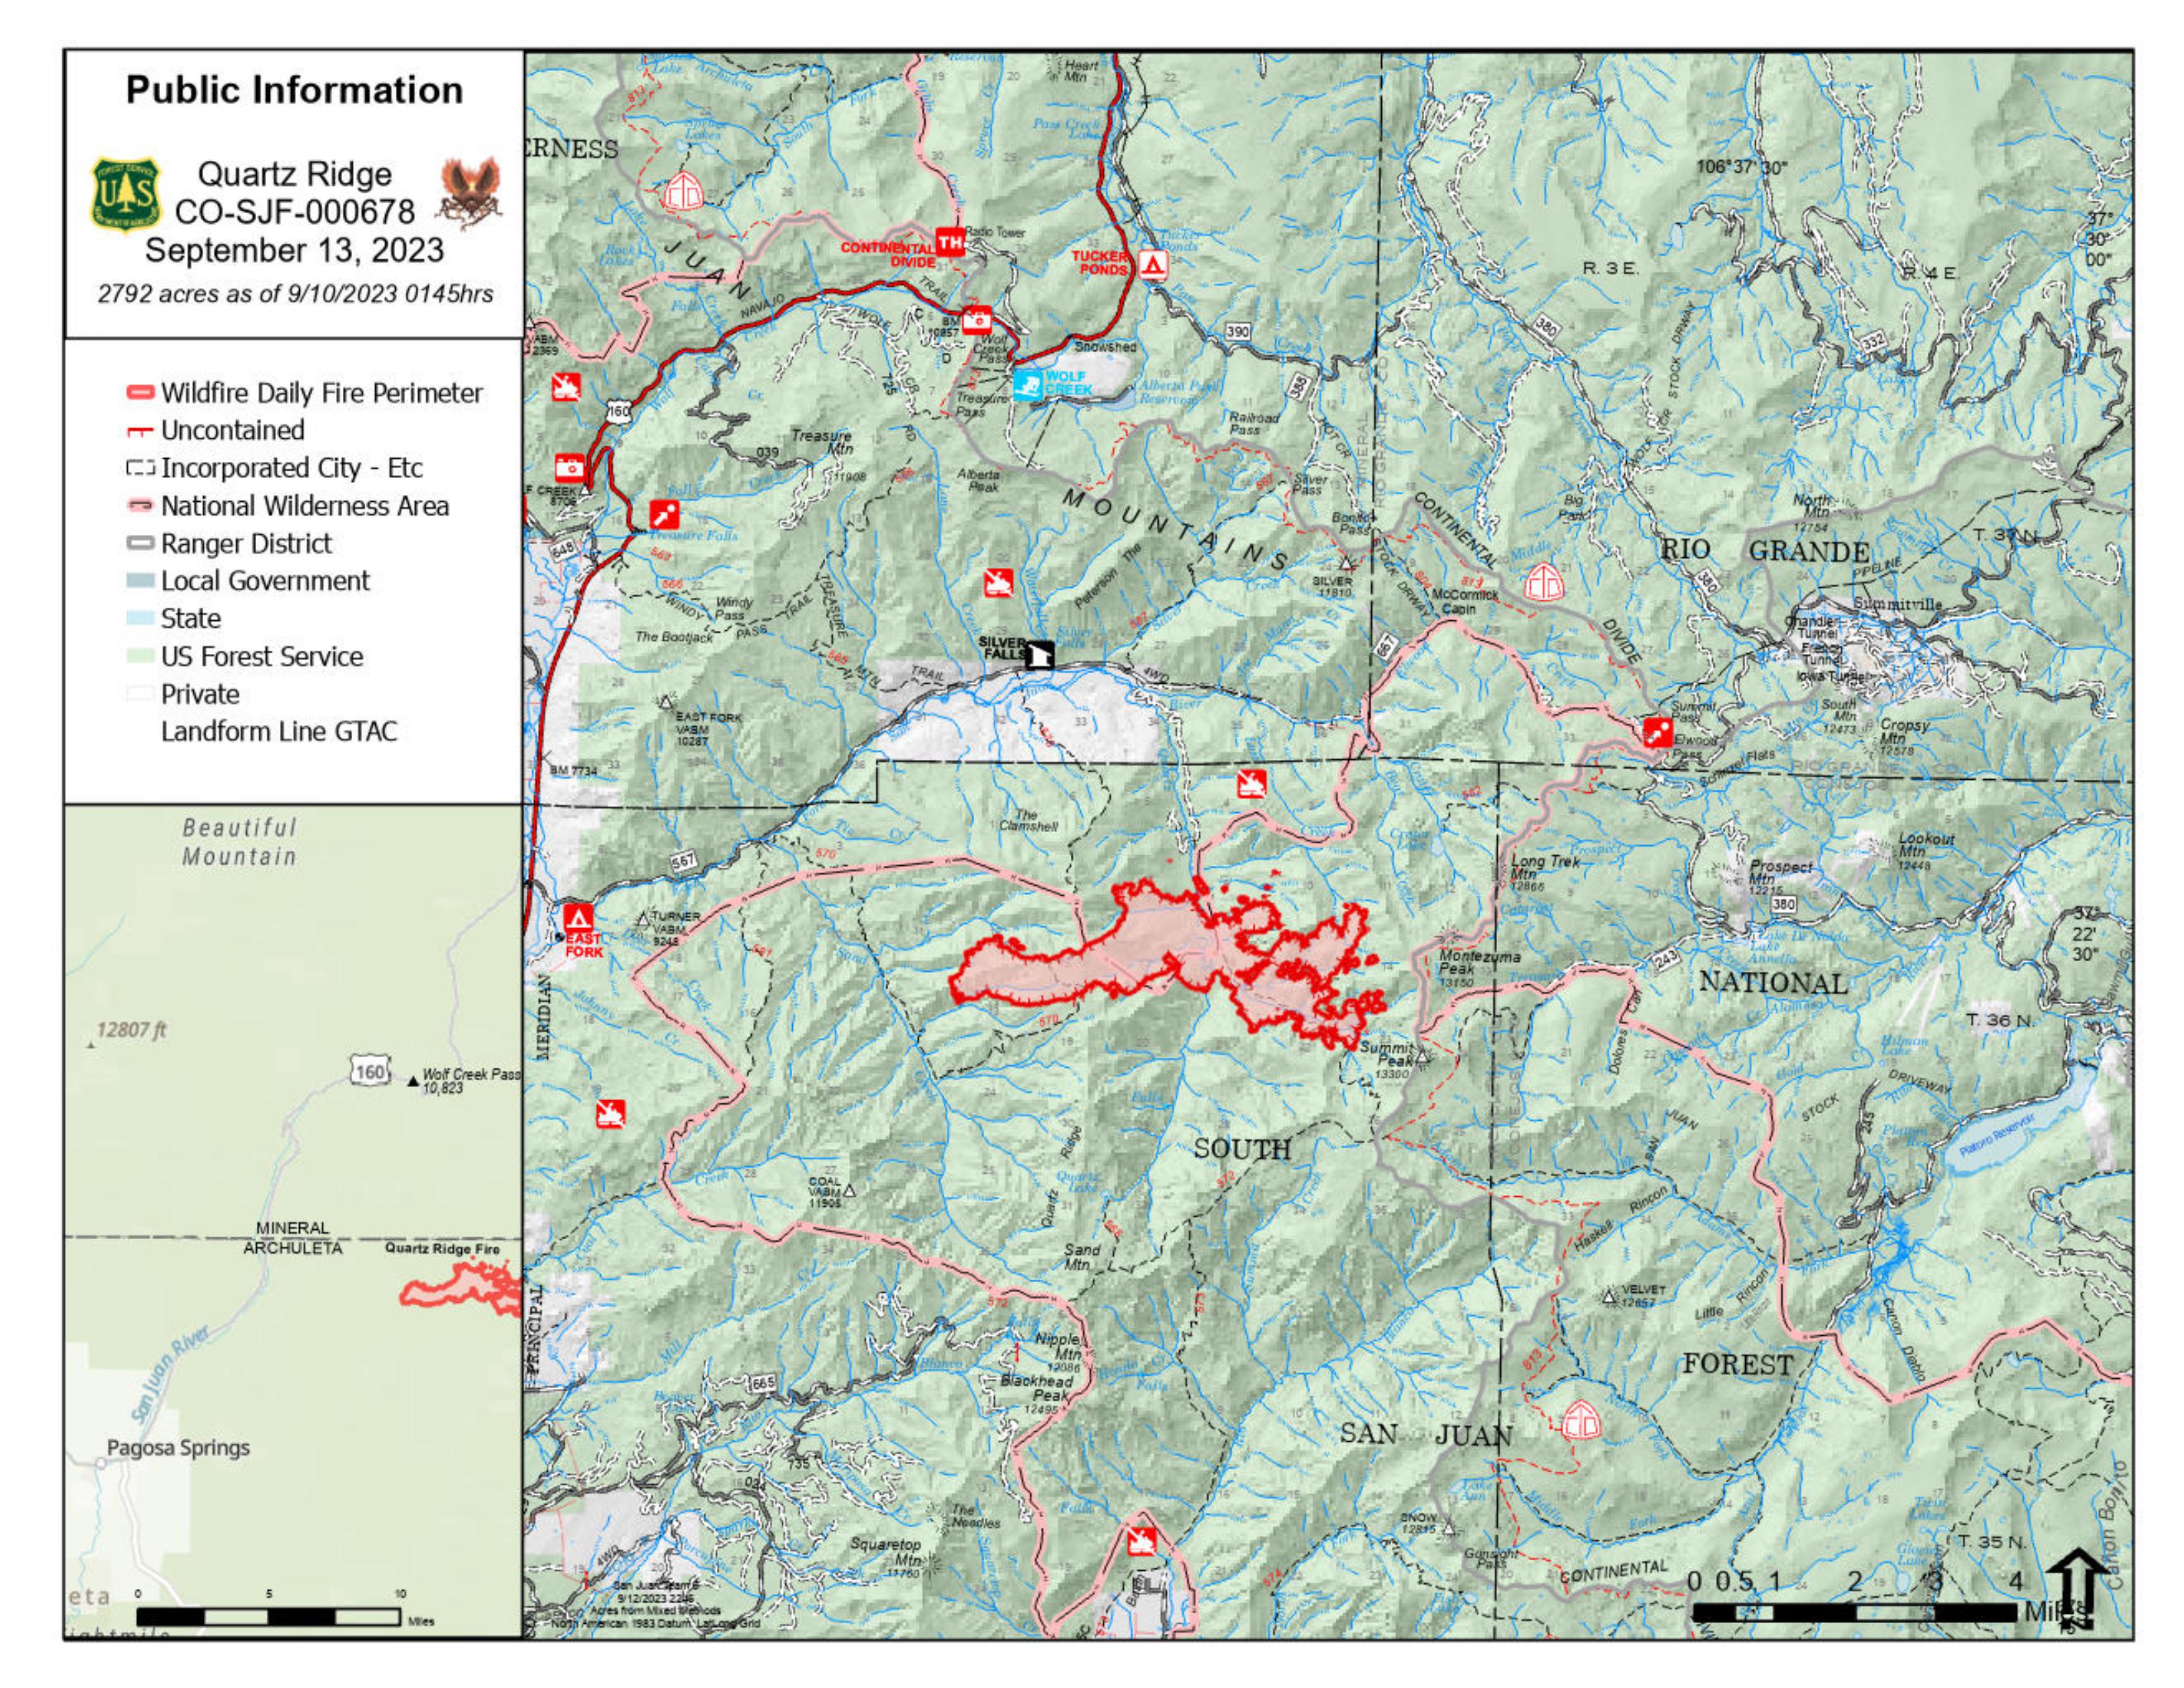 Cosjf Quartz Ridge Fire Incident Maps | InciWeb